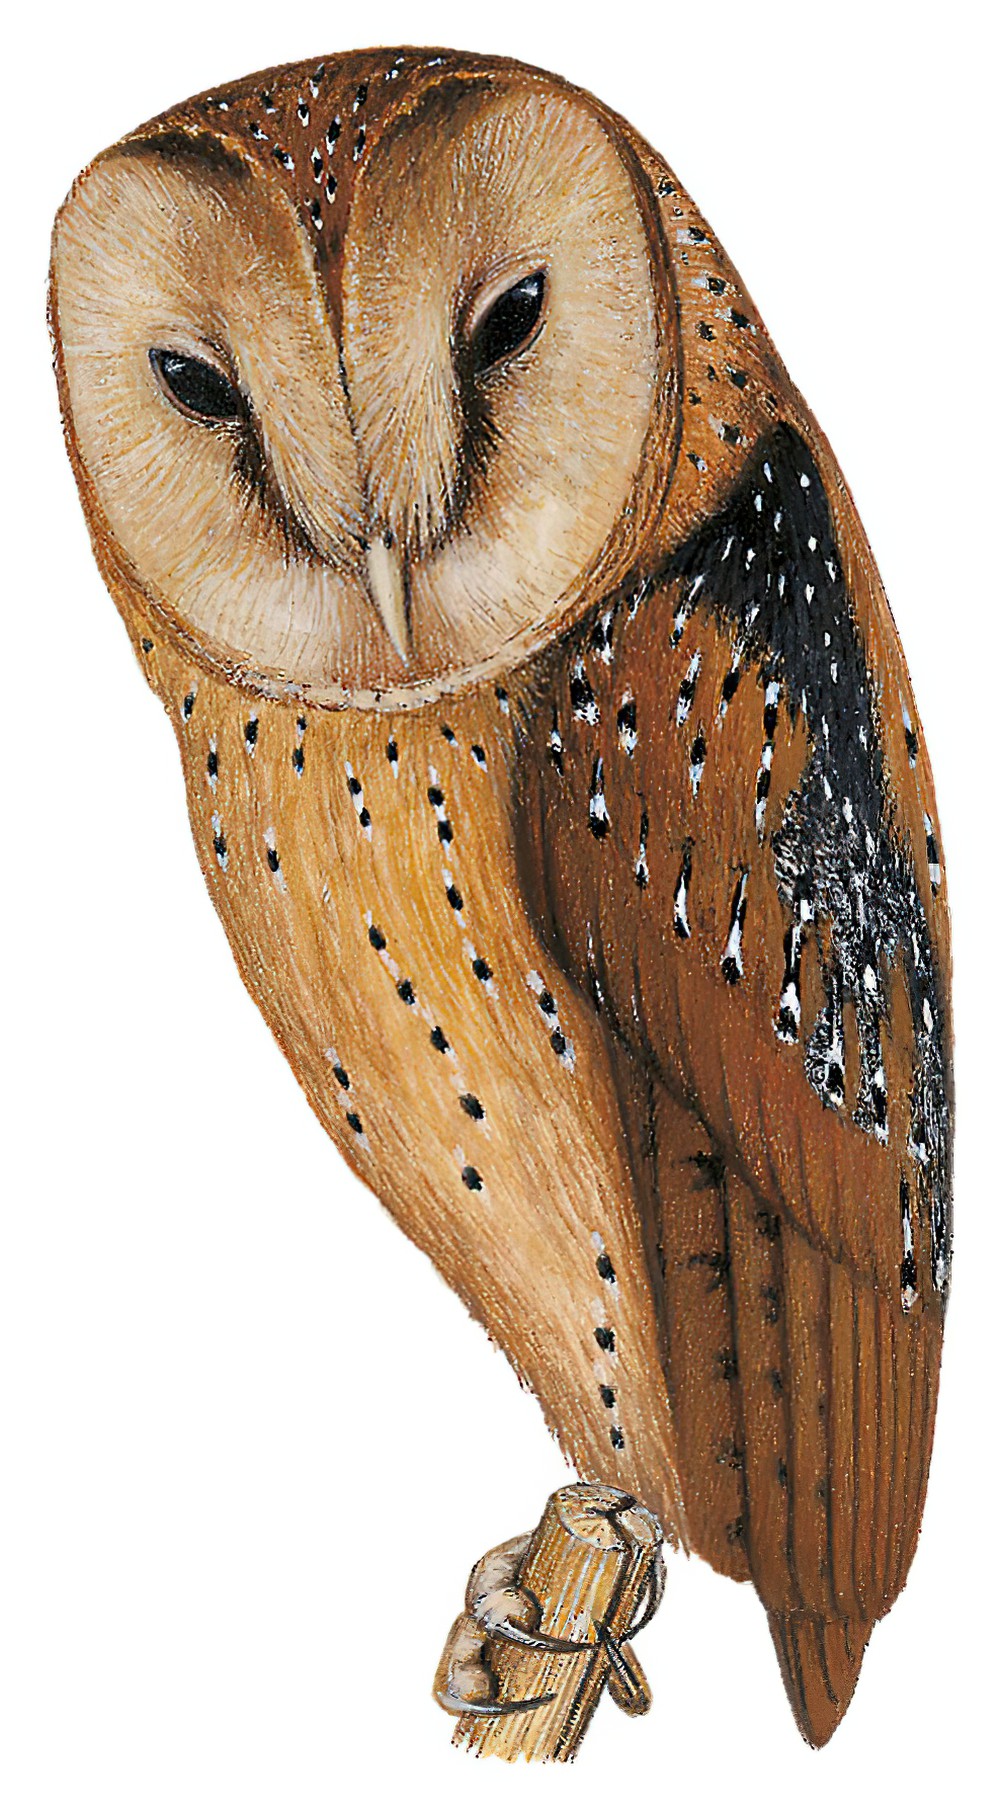 坦桑尼亚栗鸮 / Congo Bay Owl / Phodilus prigoginei